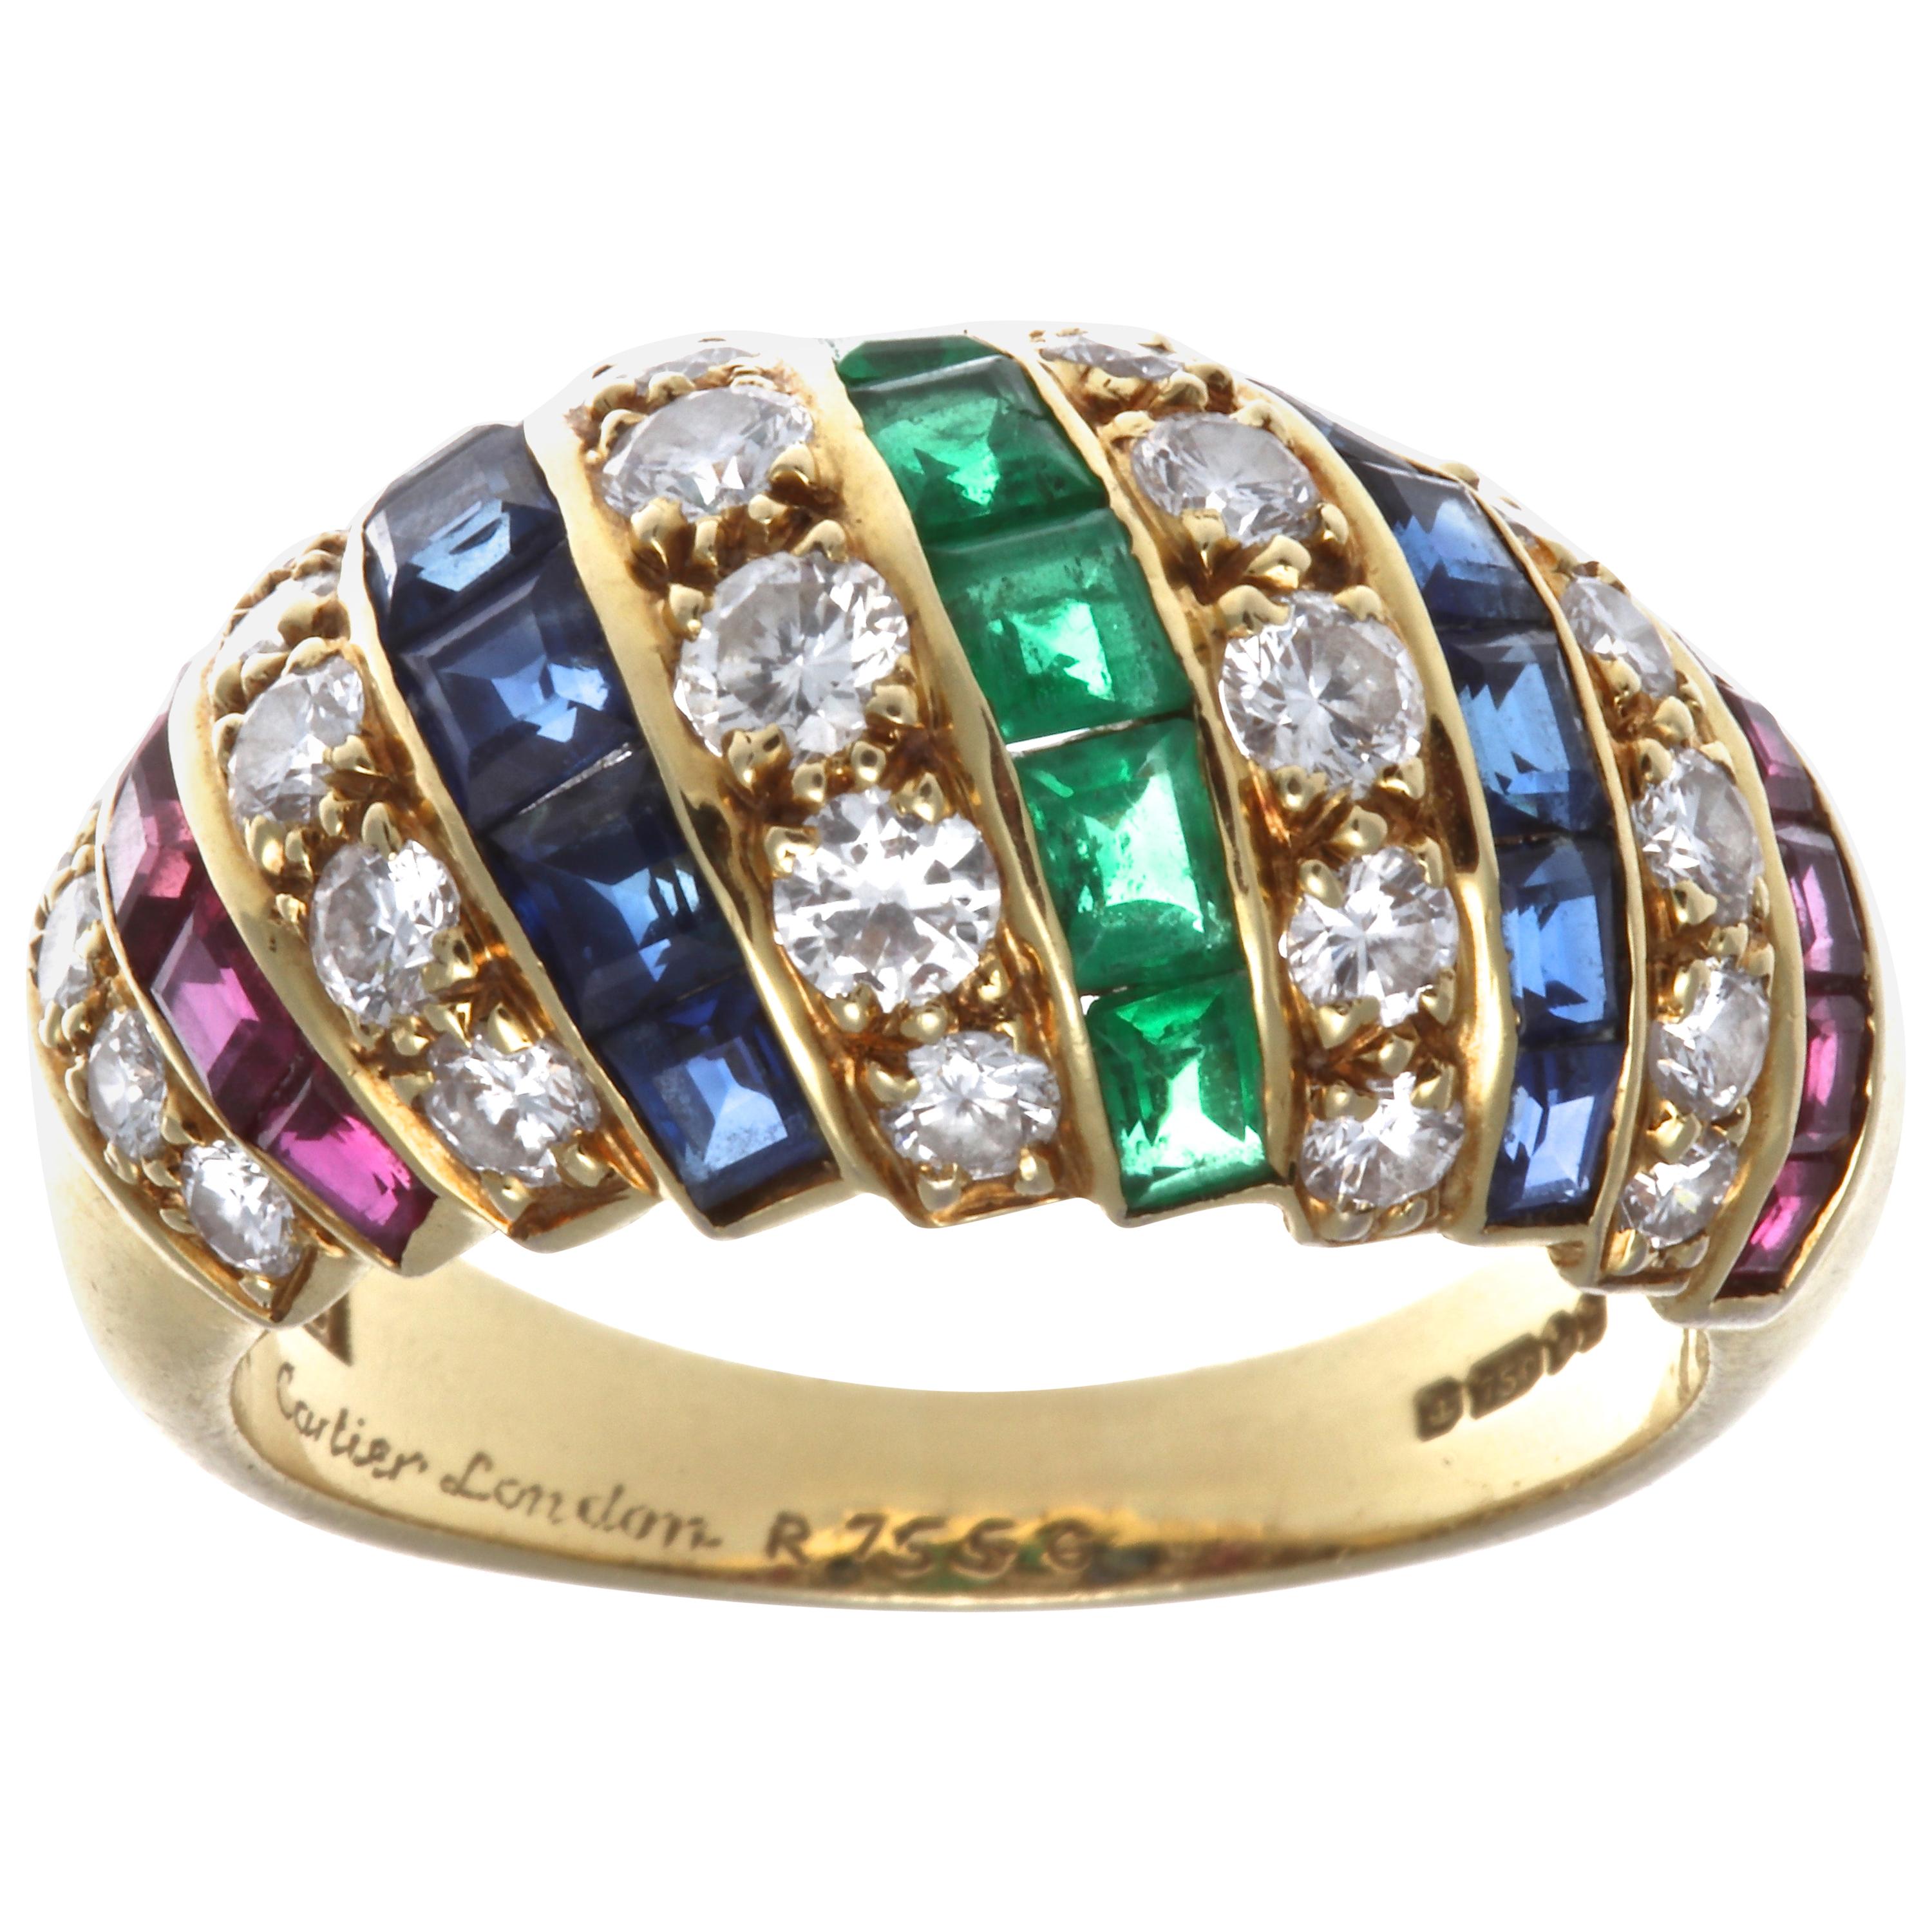 Cartier London Ruby Sapphire Diamond 18 Karat Ring